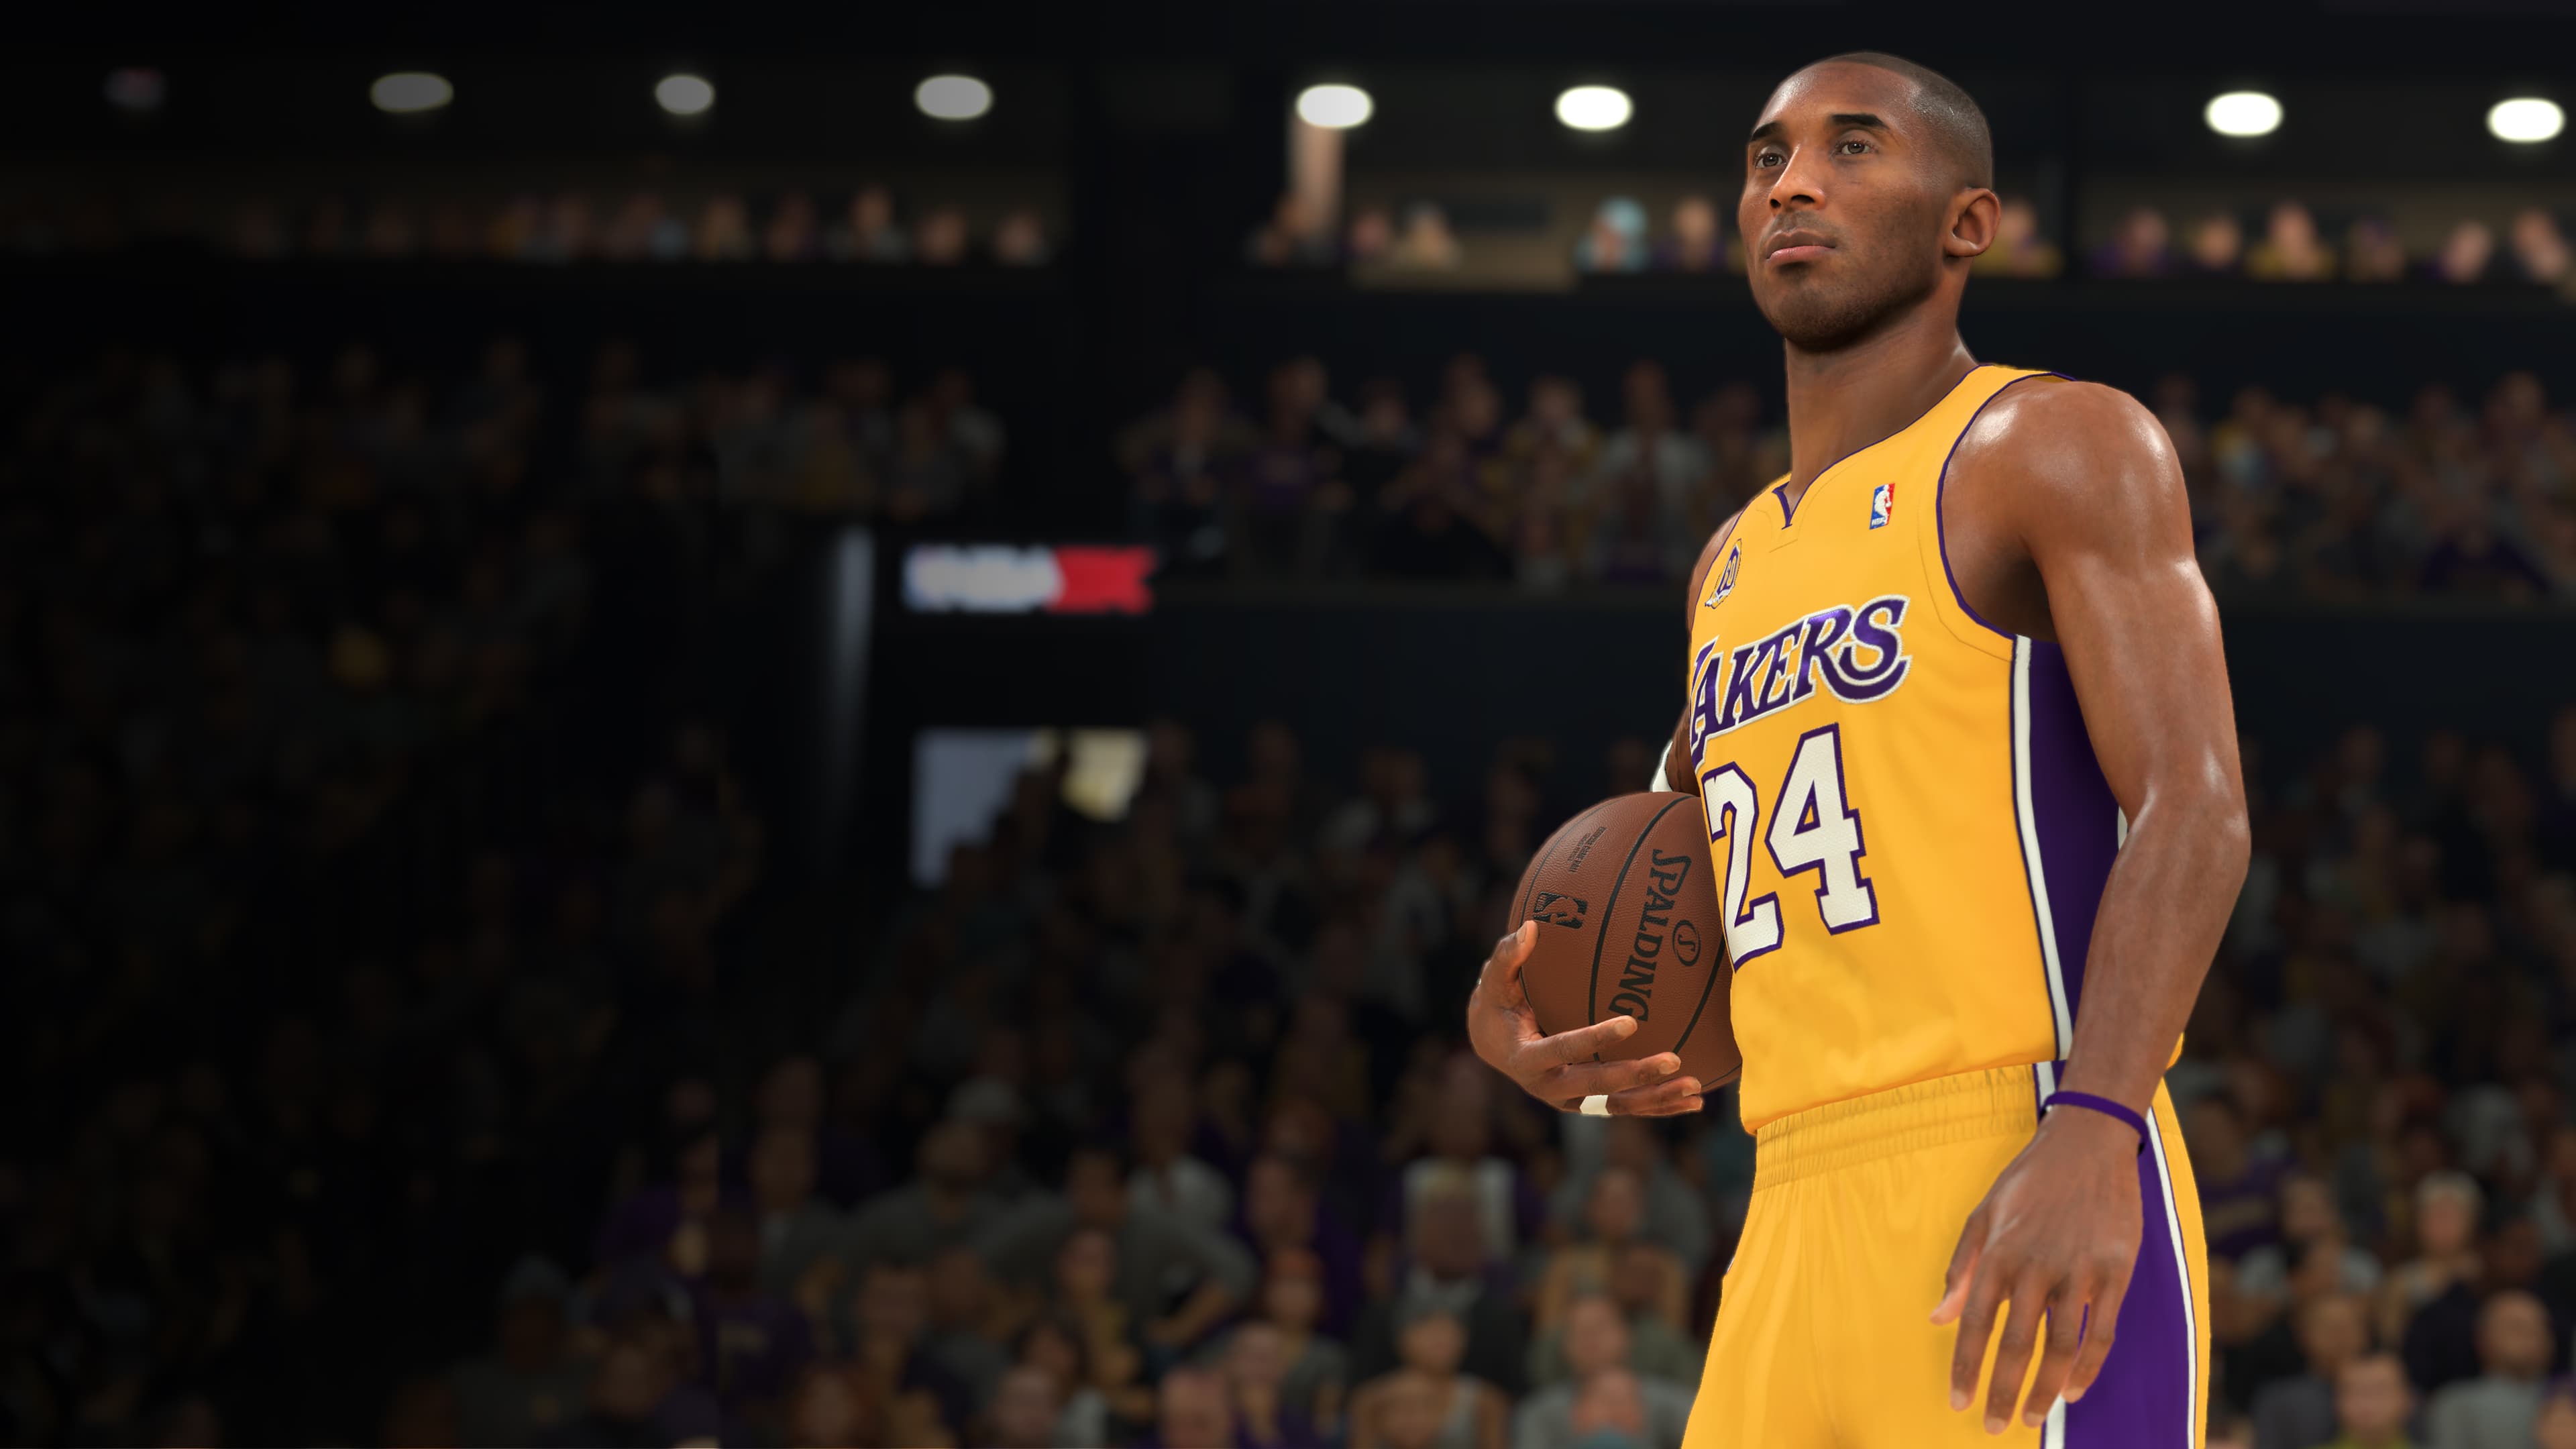 Potential Lakers City Edition Jersey Design  NBA 2K22 Next Gen Emulation  Gameplay CELTICS vs LAKERS 